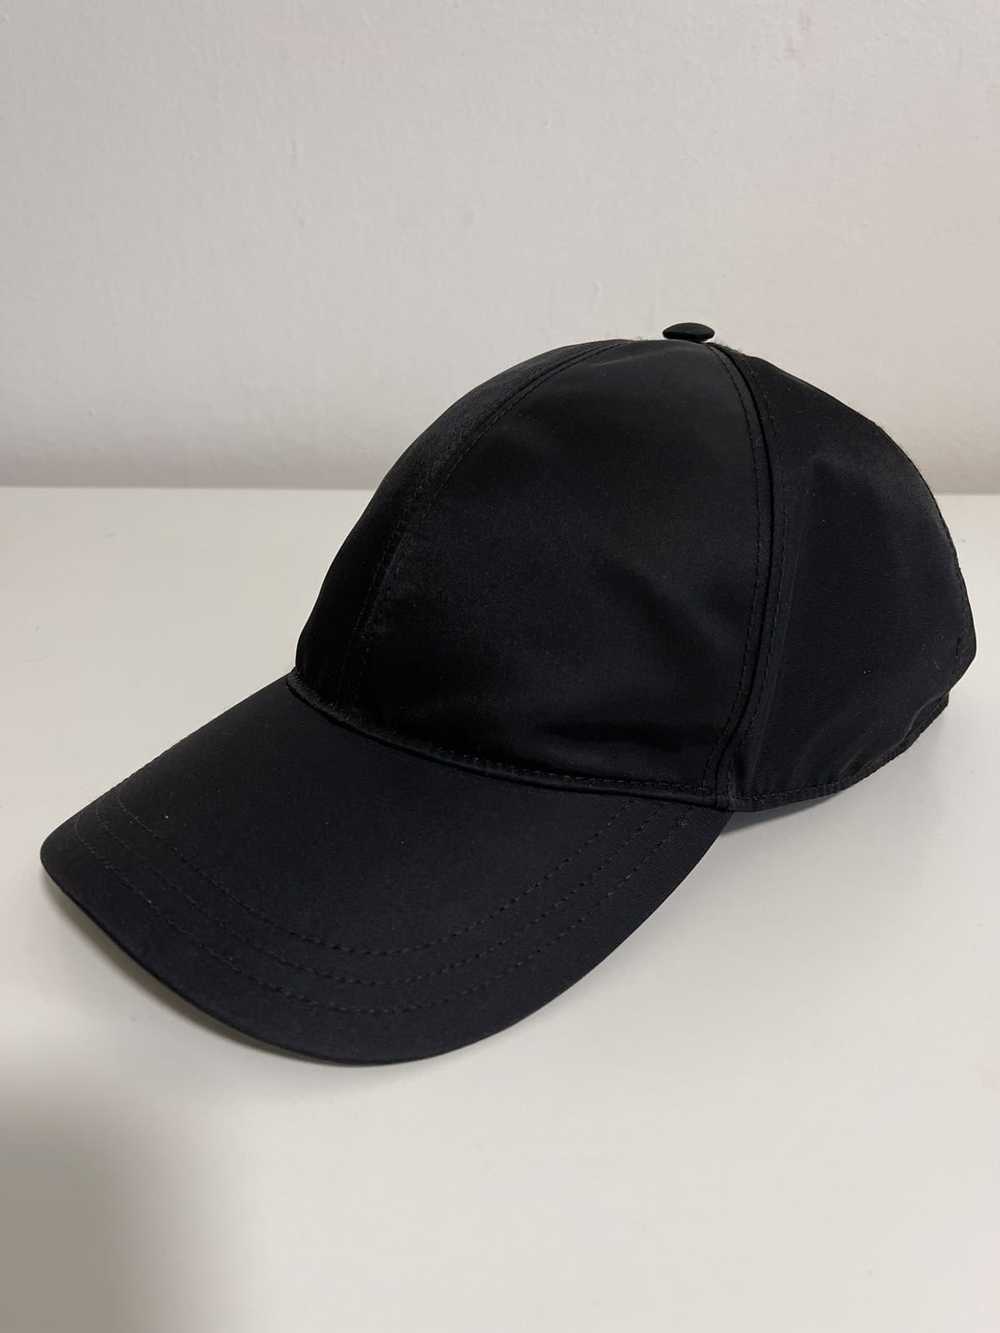 Prada Prada Re-Nylon hat - image 2